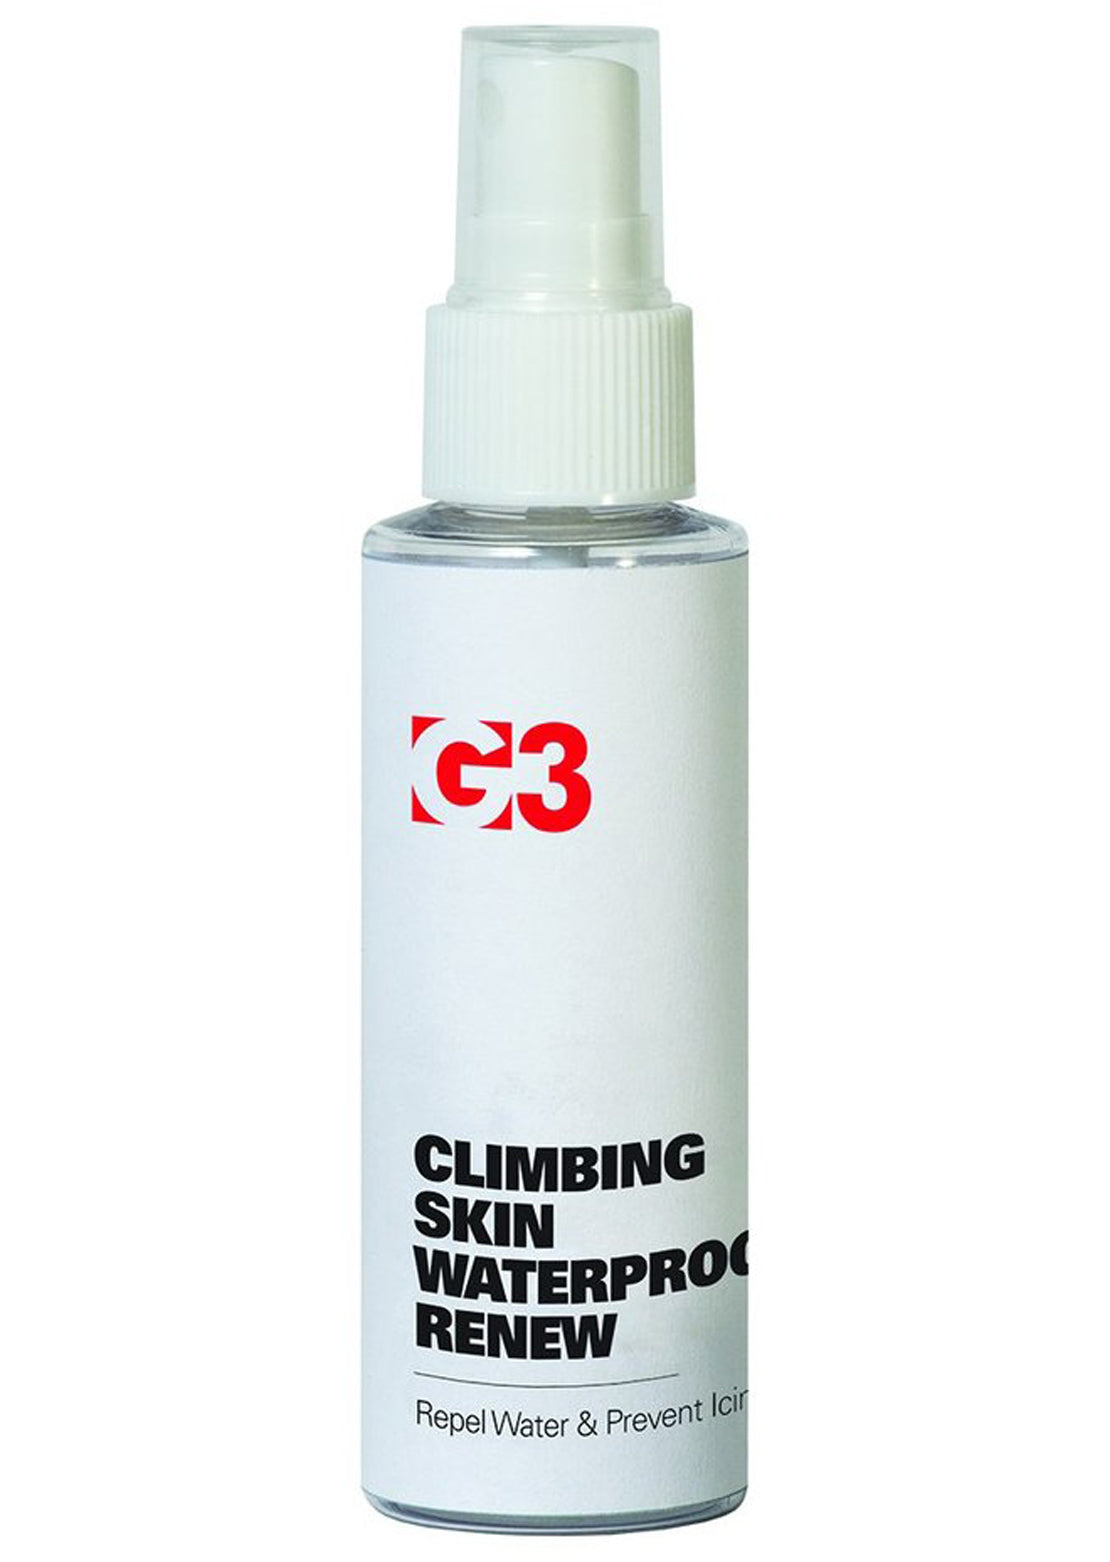 G3 Climbing Skin Waterproof Renew Spray - 60 ml Clear